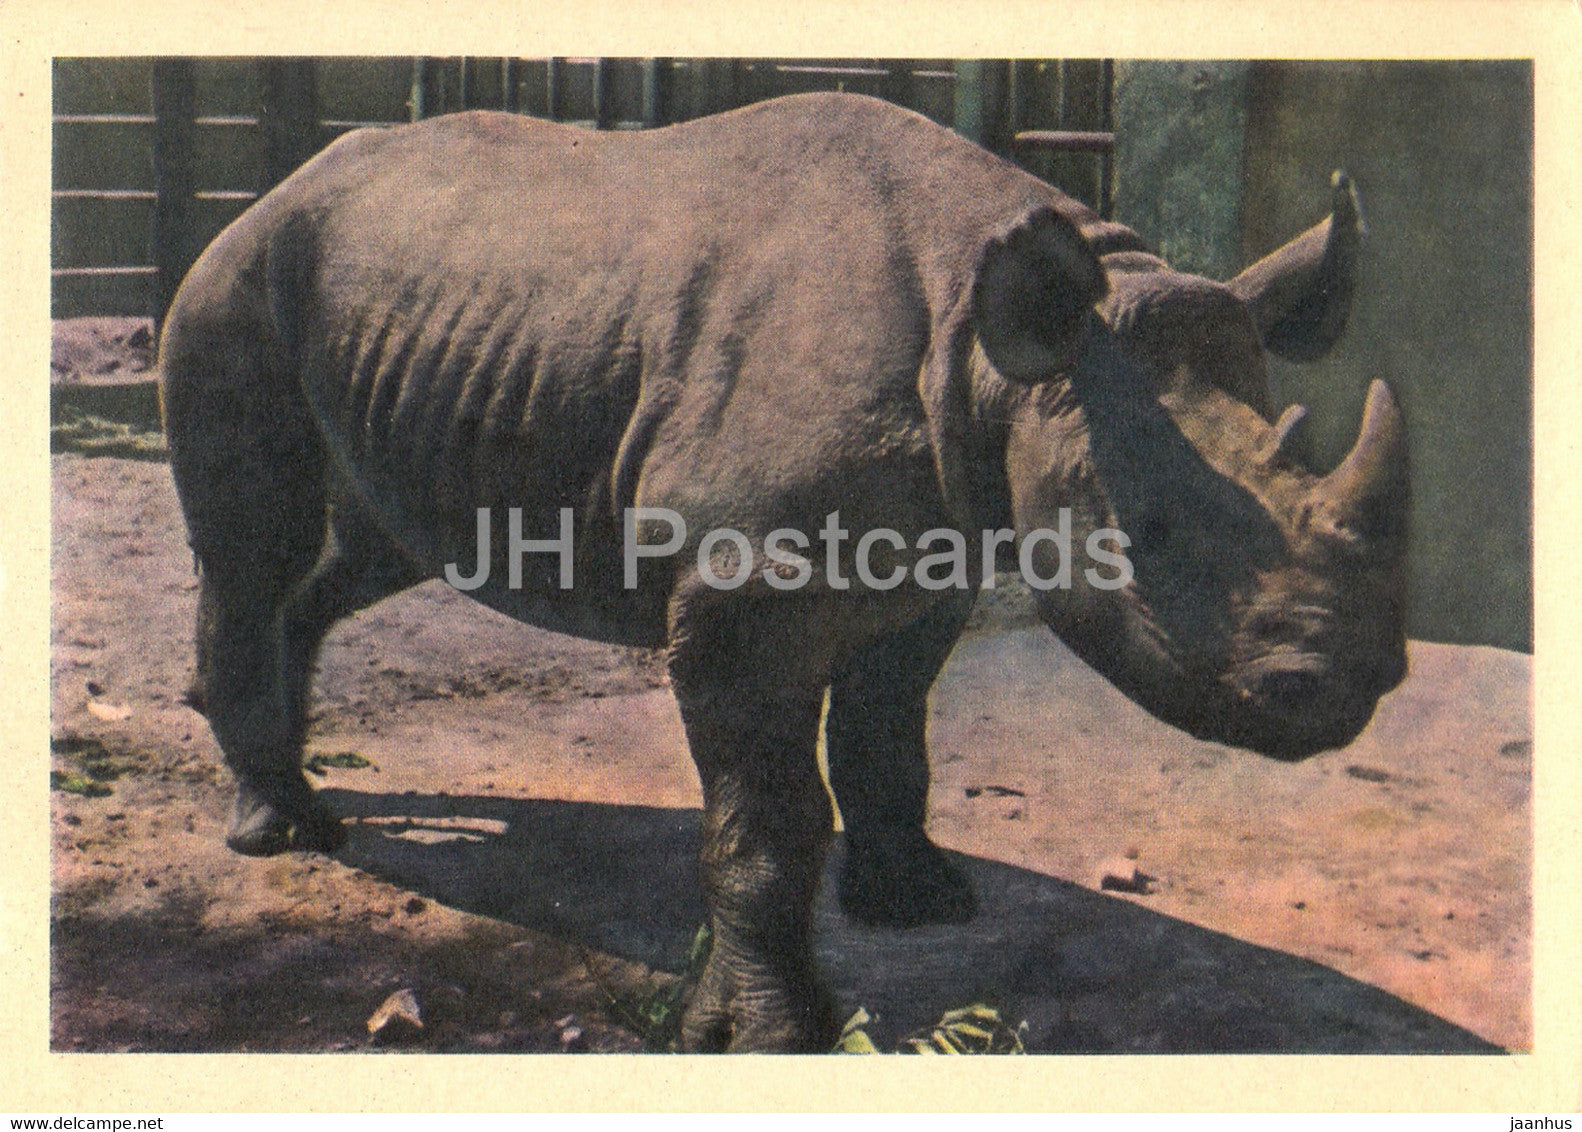 Rhinoceros - Moscow Zoo - 1963 - Russia USSR - unused - JH Postcards